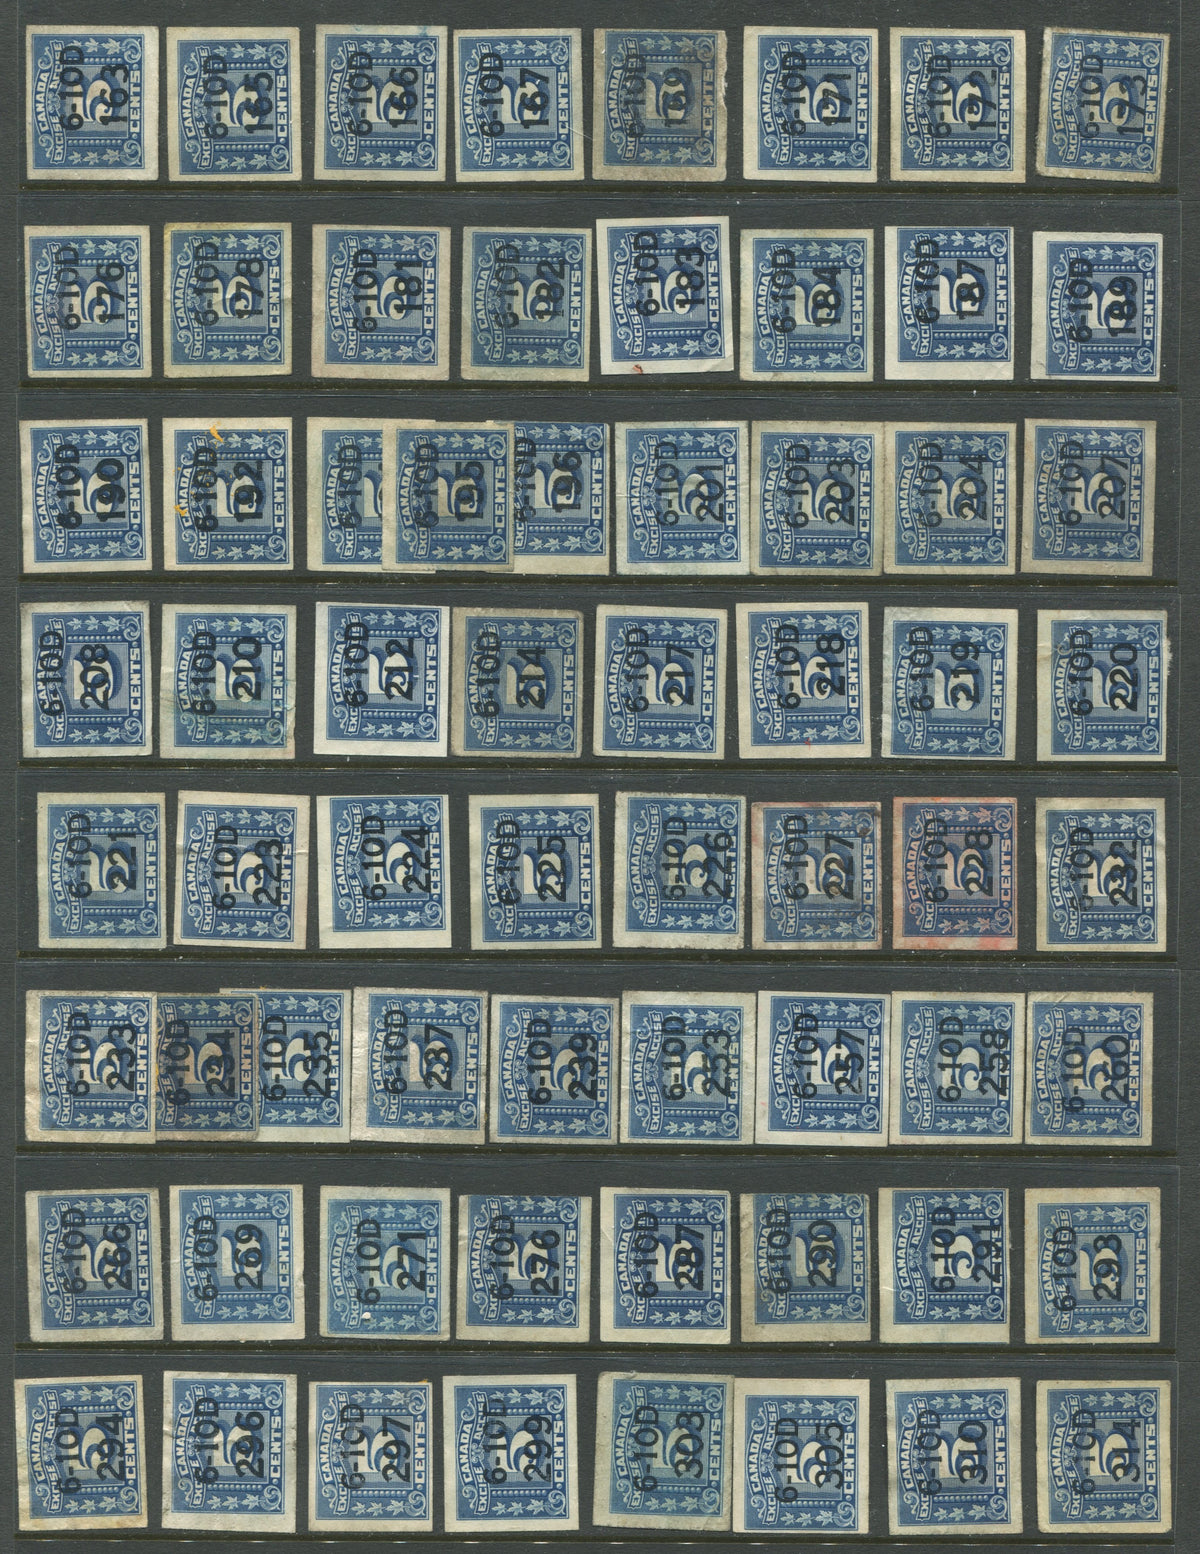 0099FX1904 - Canada Excise Stamp Precancel Collection - FX99